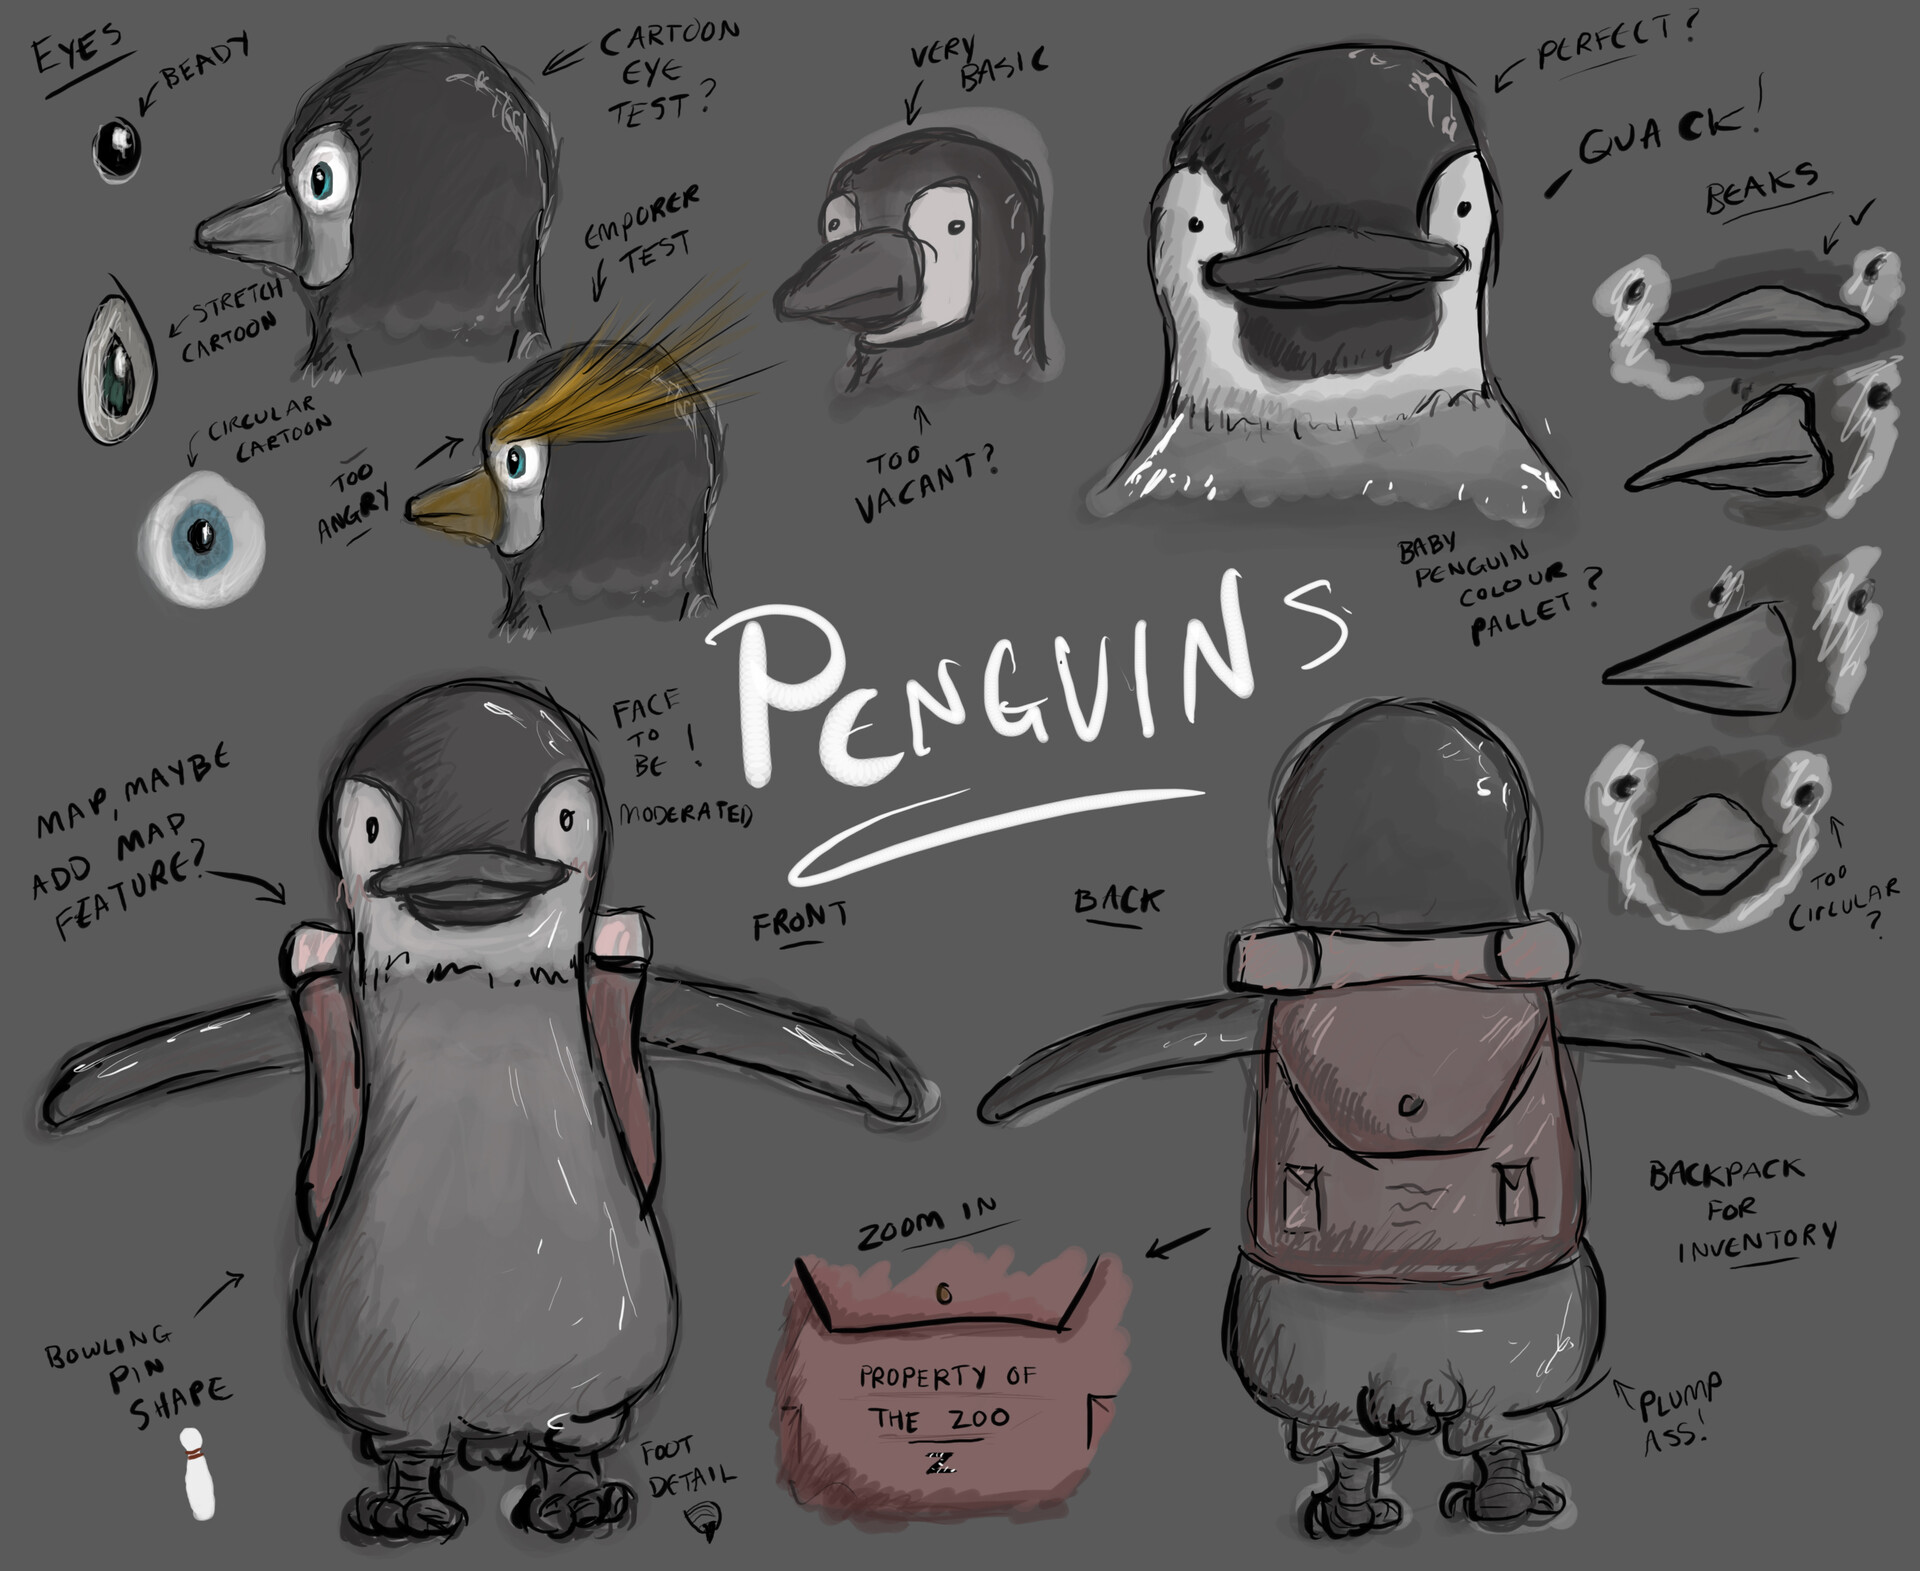 ArtStation - Adopt Me penguin: Inspired by dreamcraft. Art concept